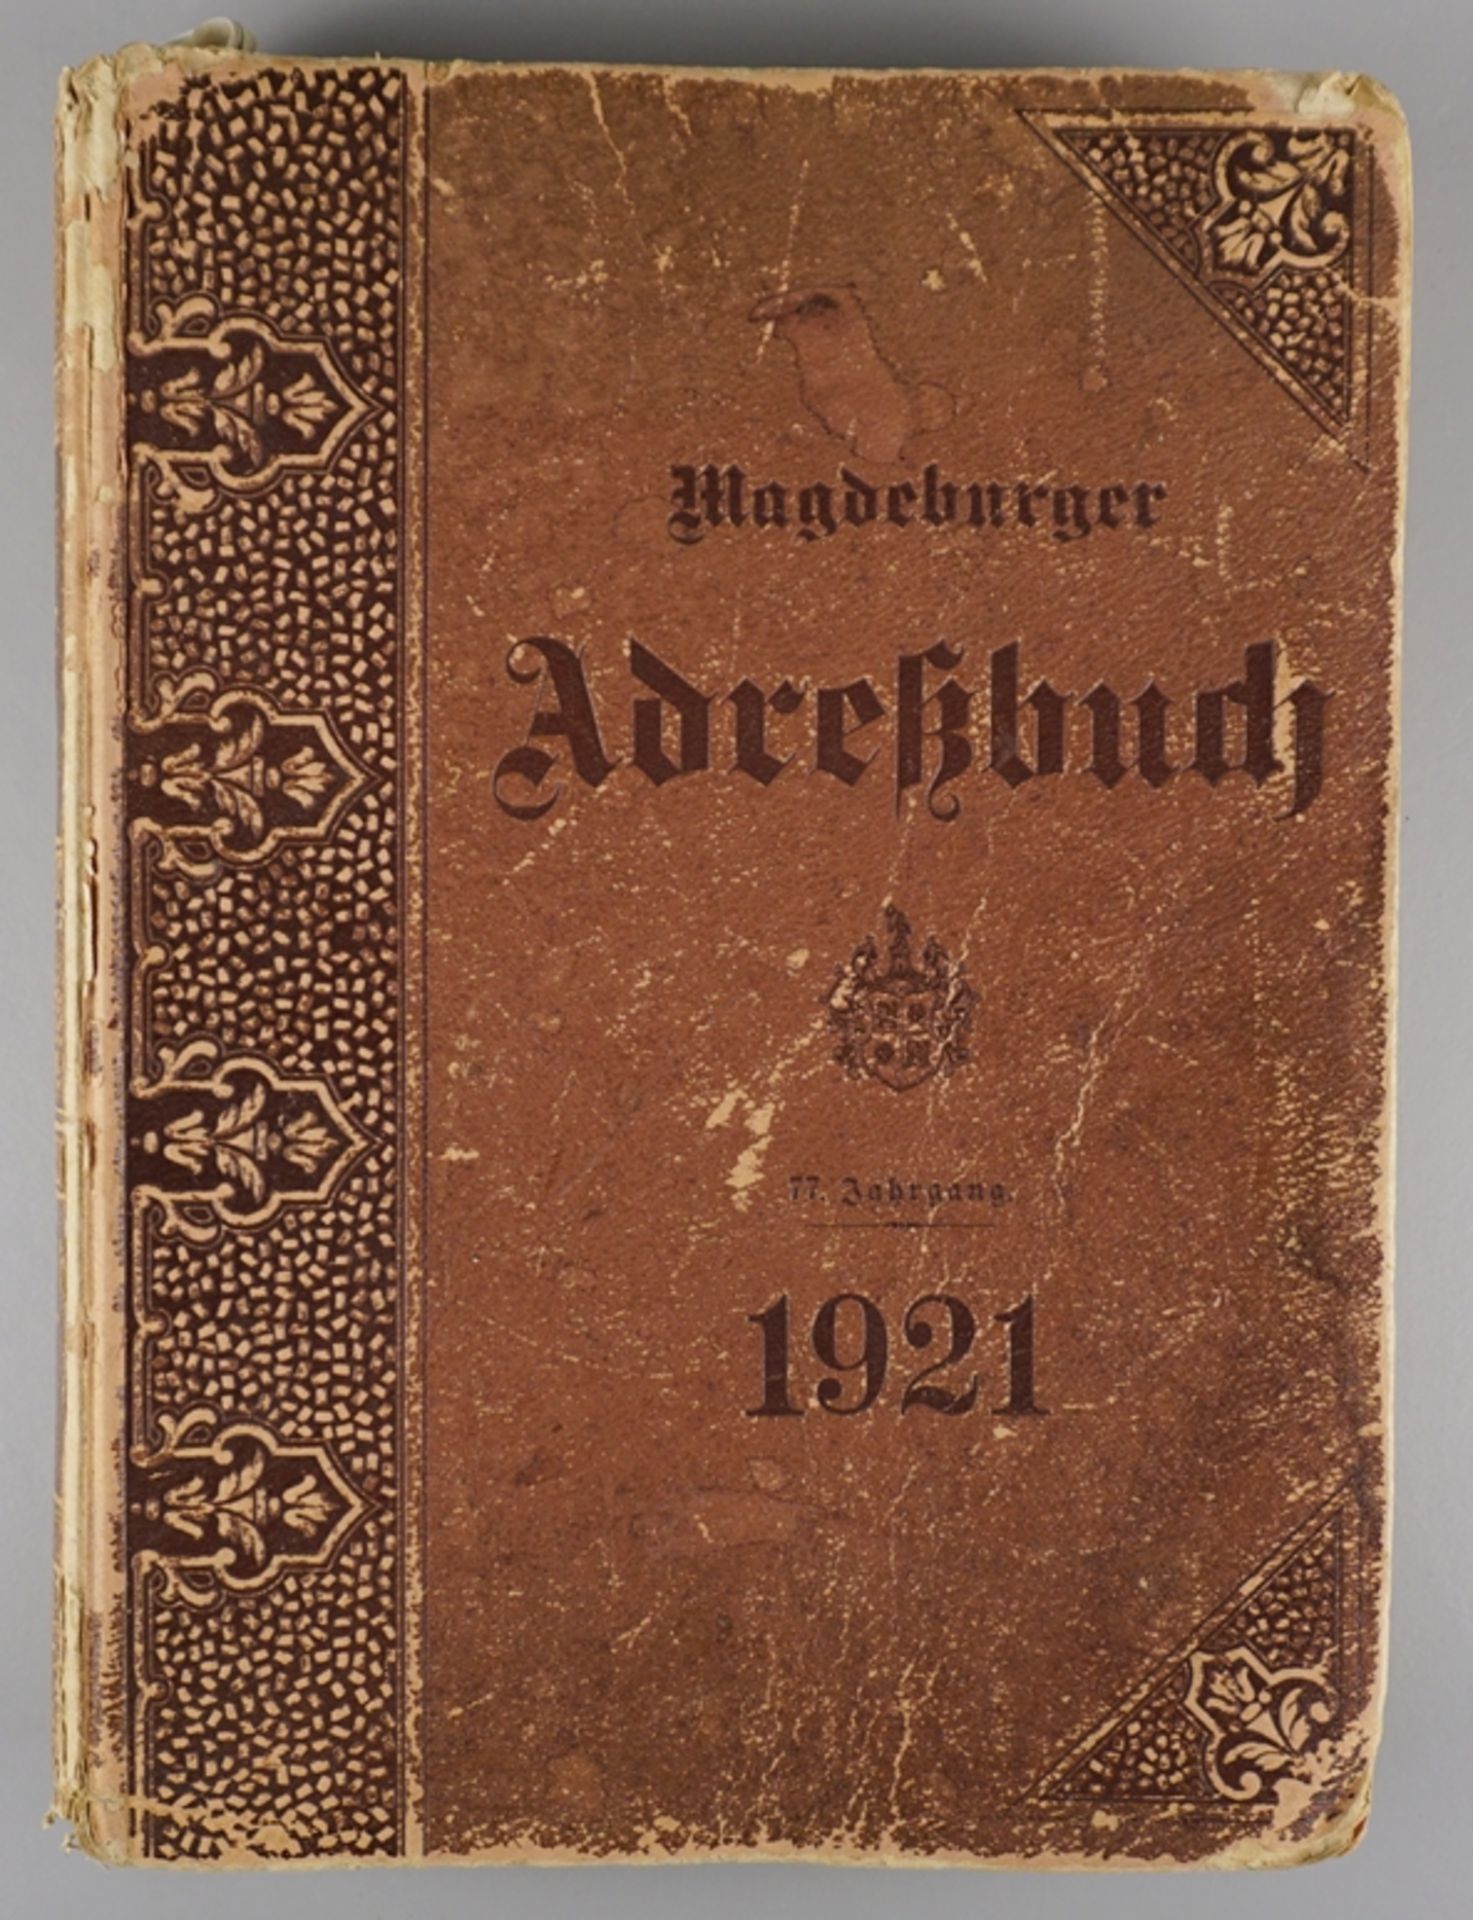 Magdeburger Adreßbuch, 1921